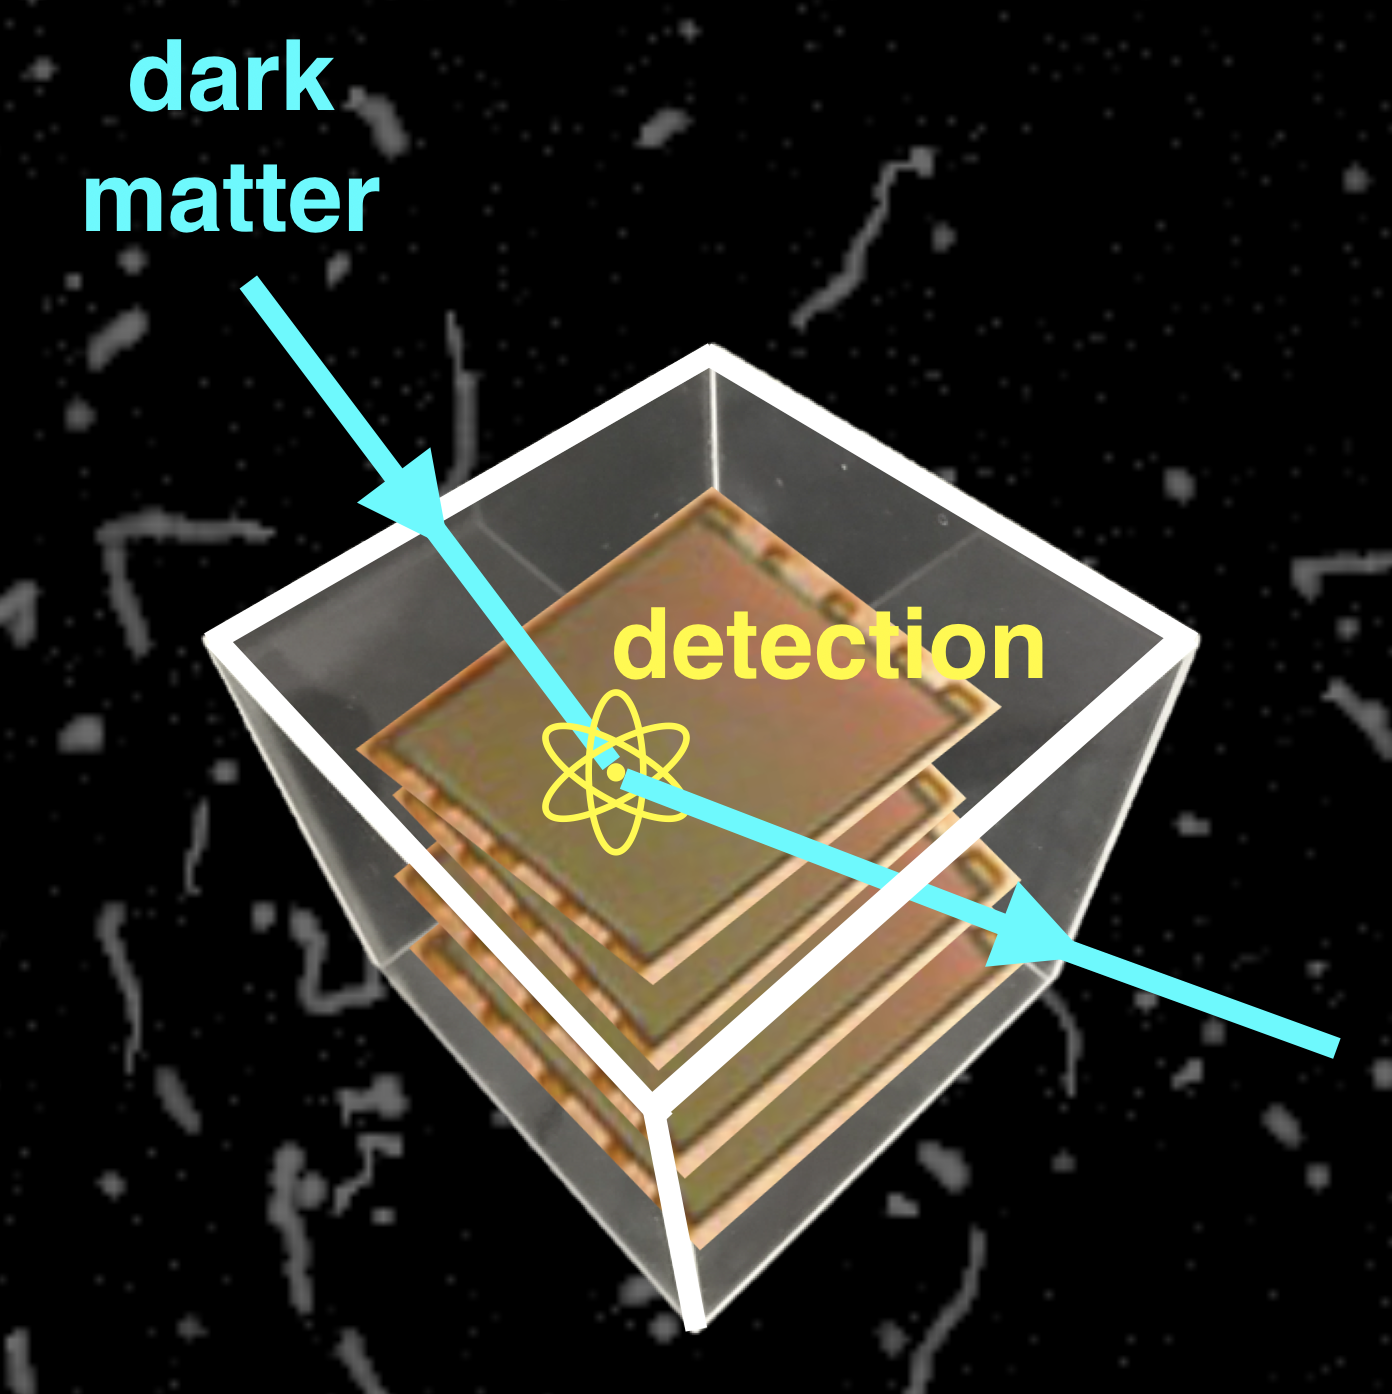 Detecting dark matter in CCD detectors